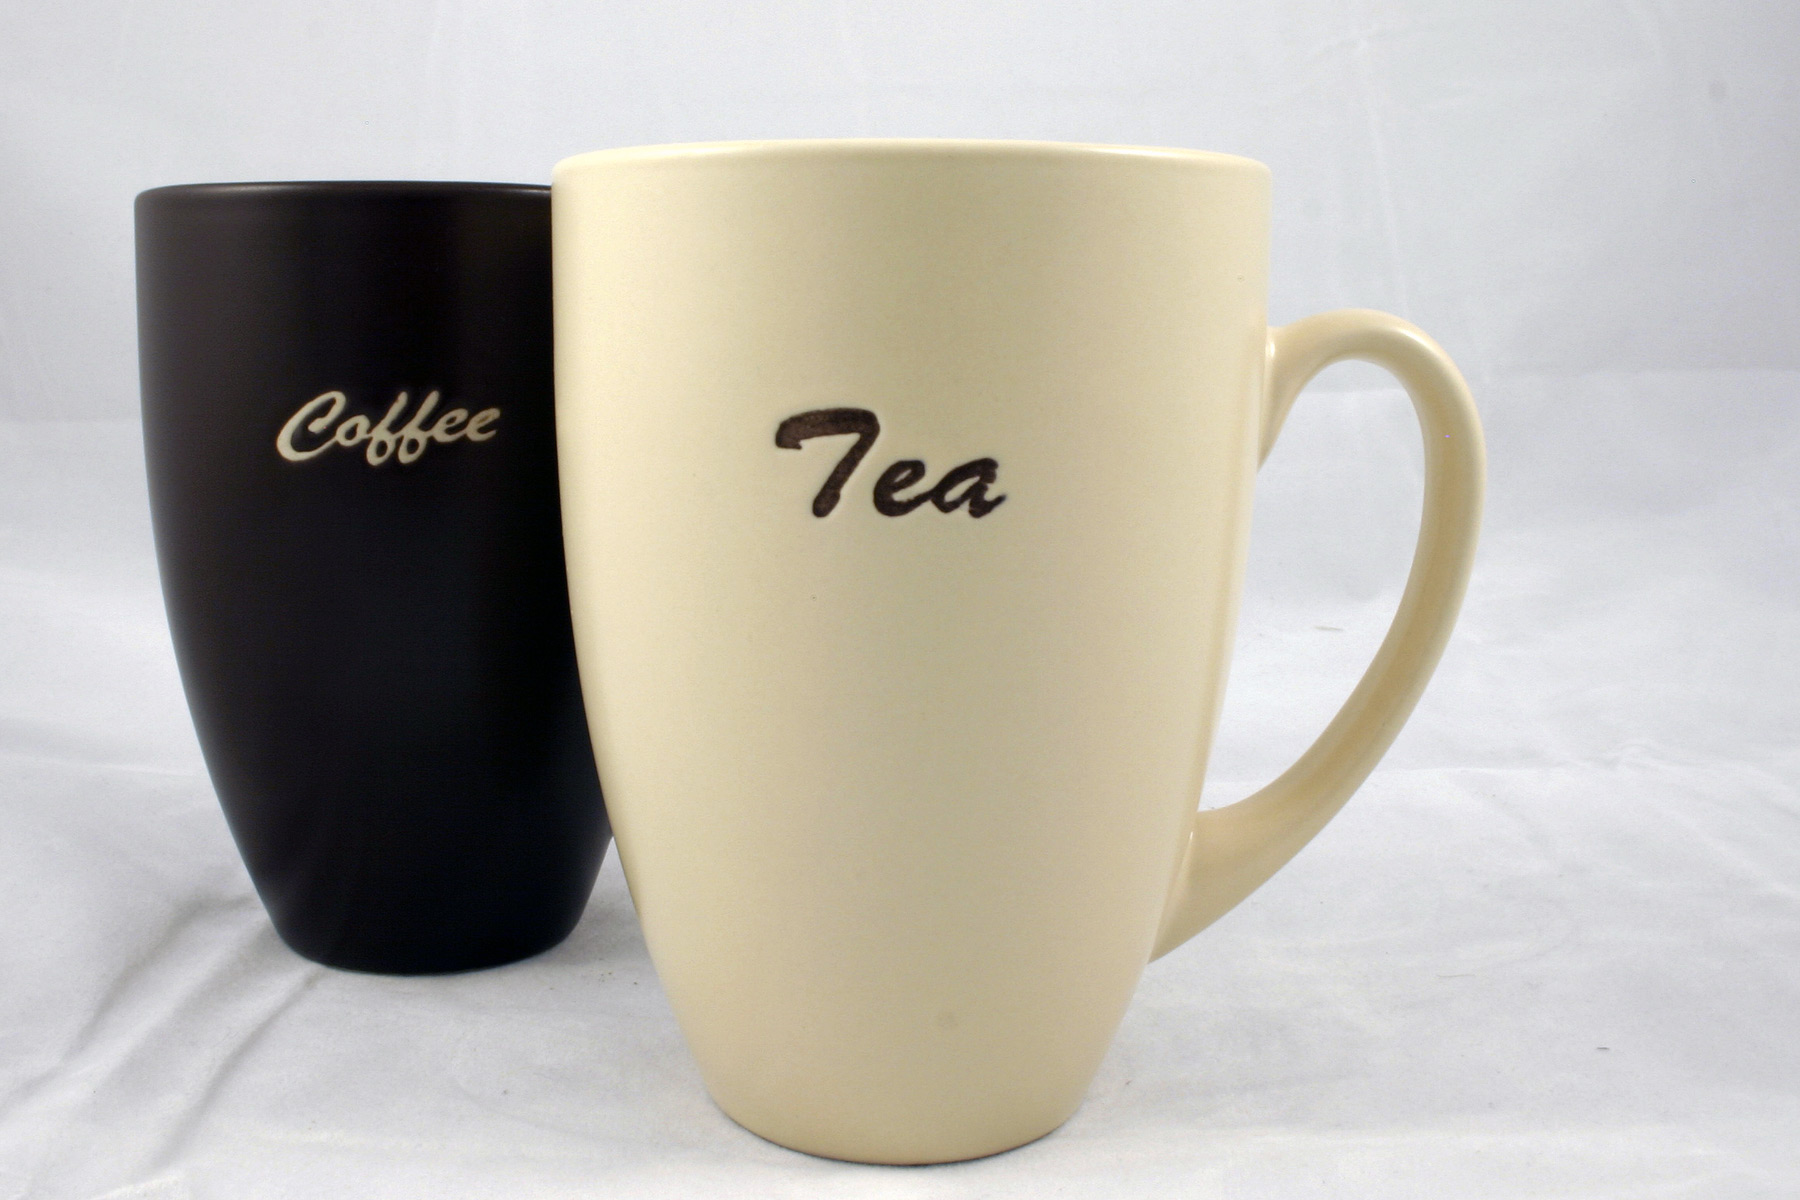 Tea and coffee mug photo